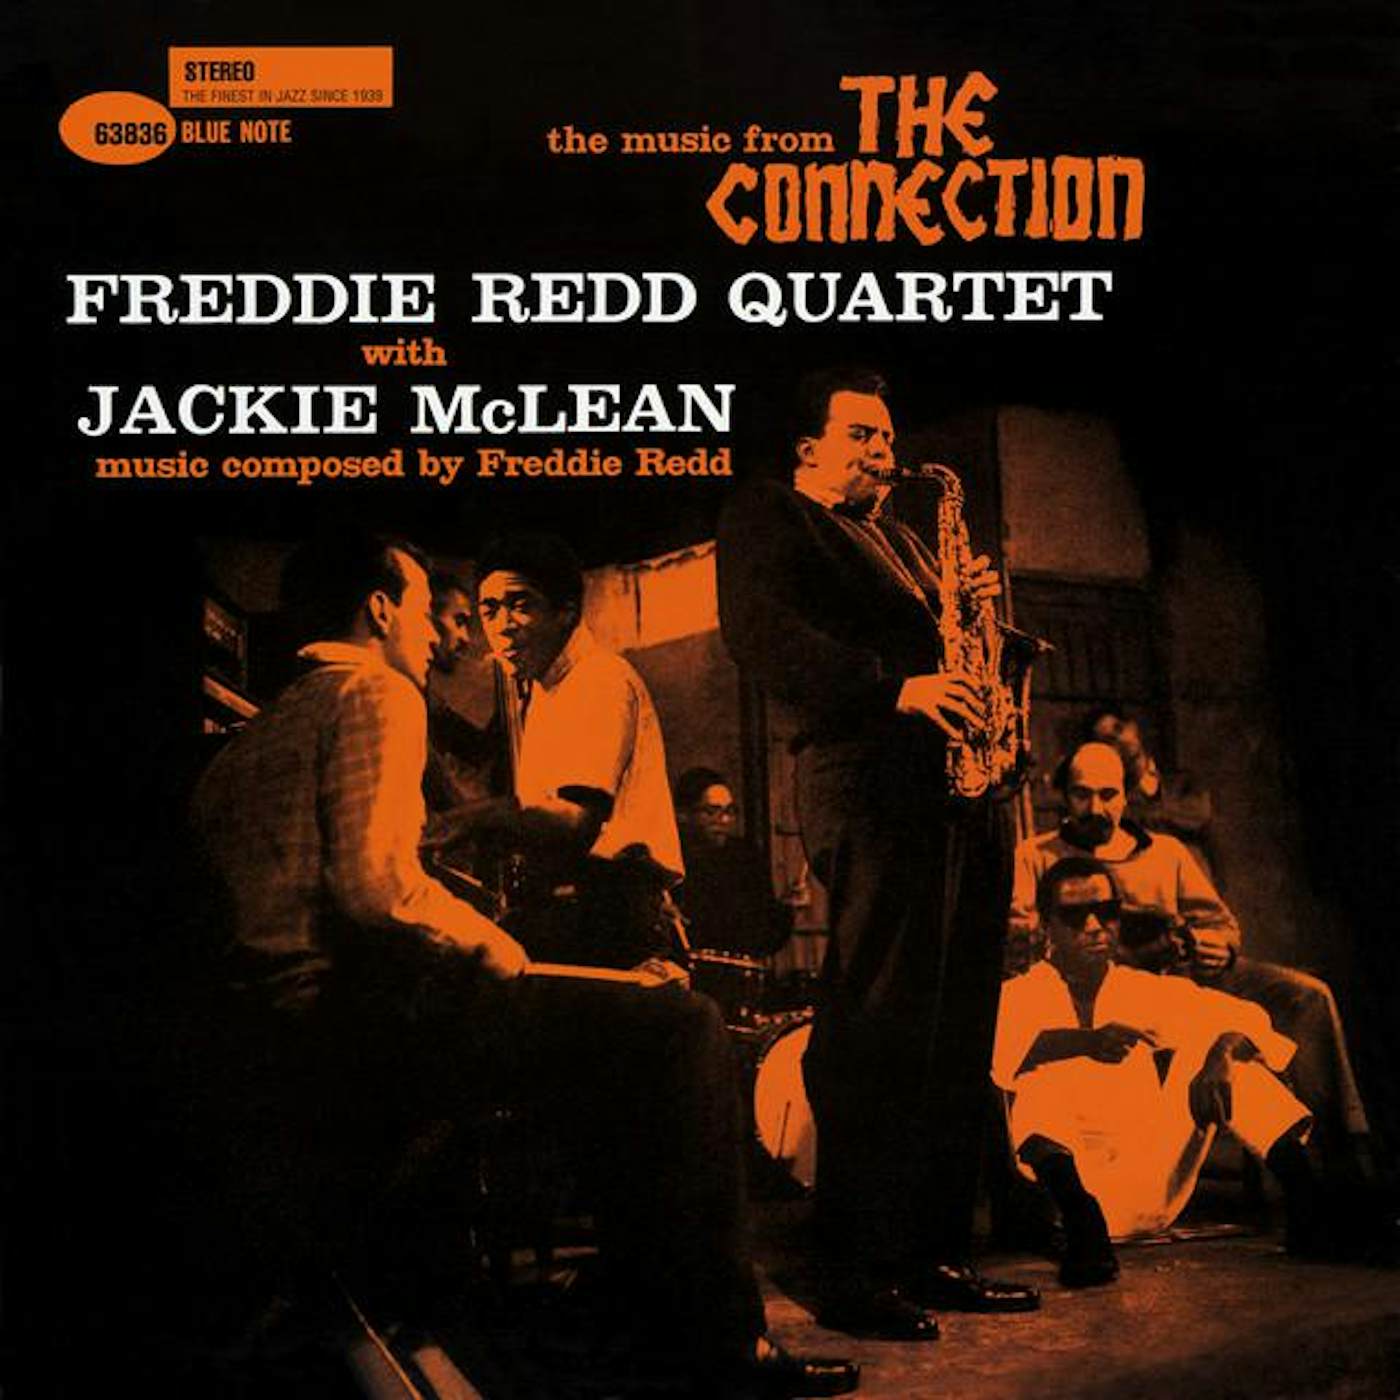 Freddie Redd Quartet